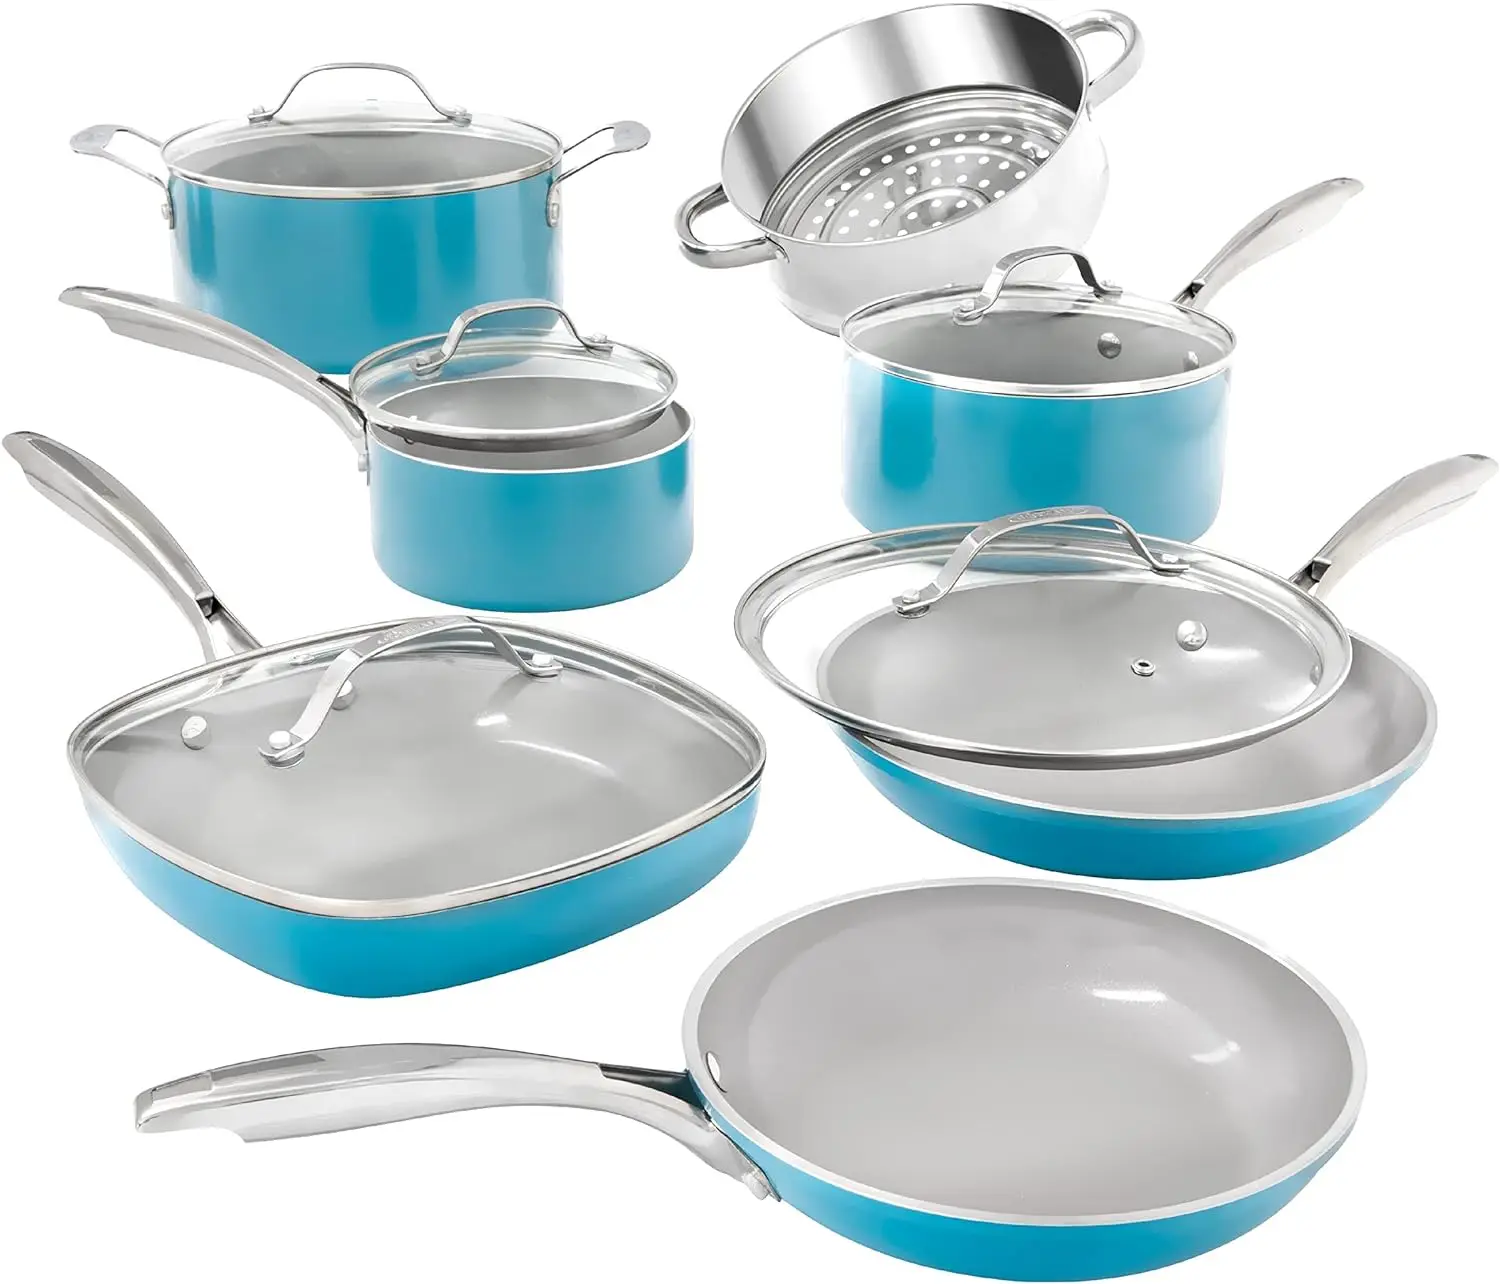 

Blue Pots and Pans Set, 12 Piece Nonstick Ceramic Cookware Set, Includes Frying Pans, Stockpots & Saucepans, Stay Cool Handl Pla